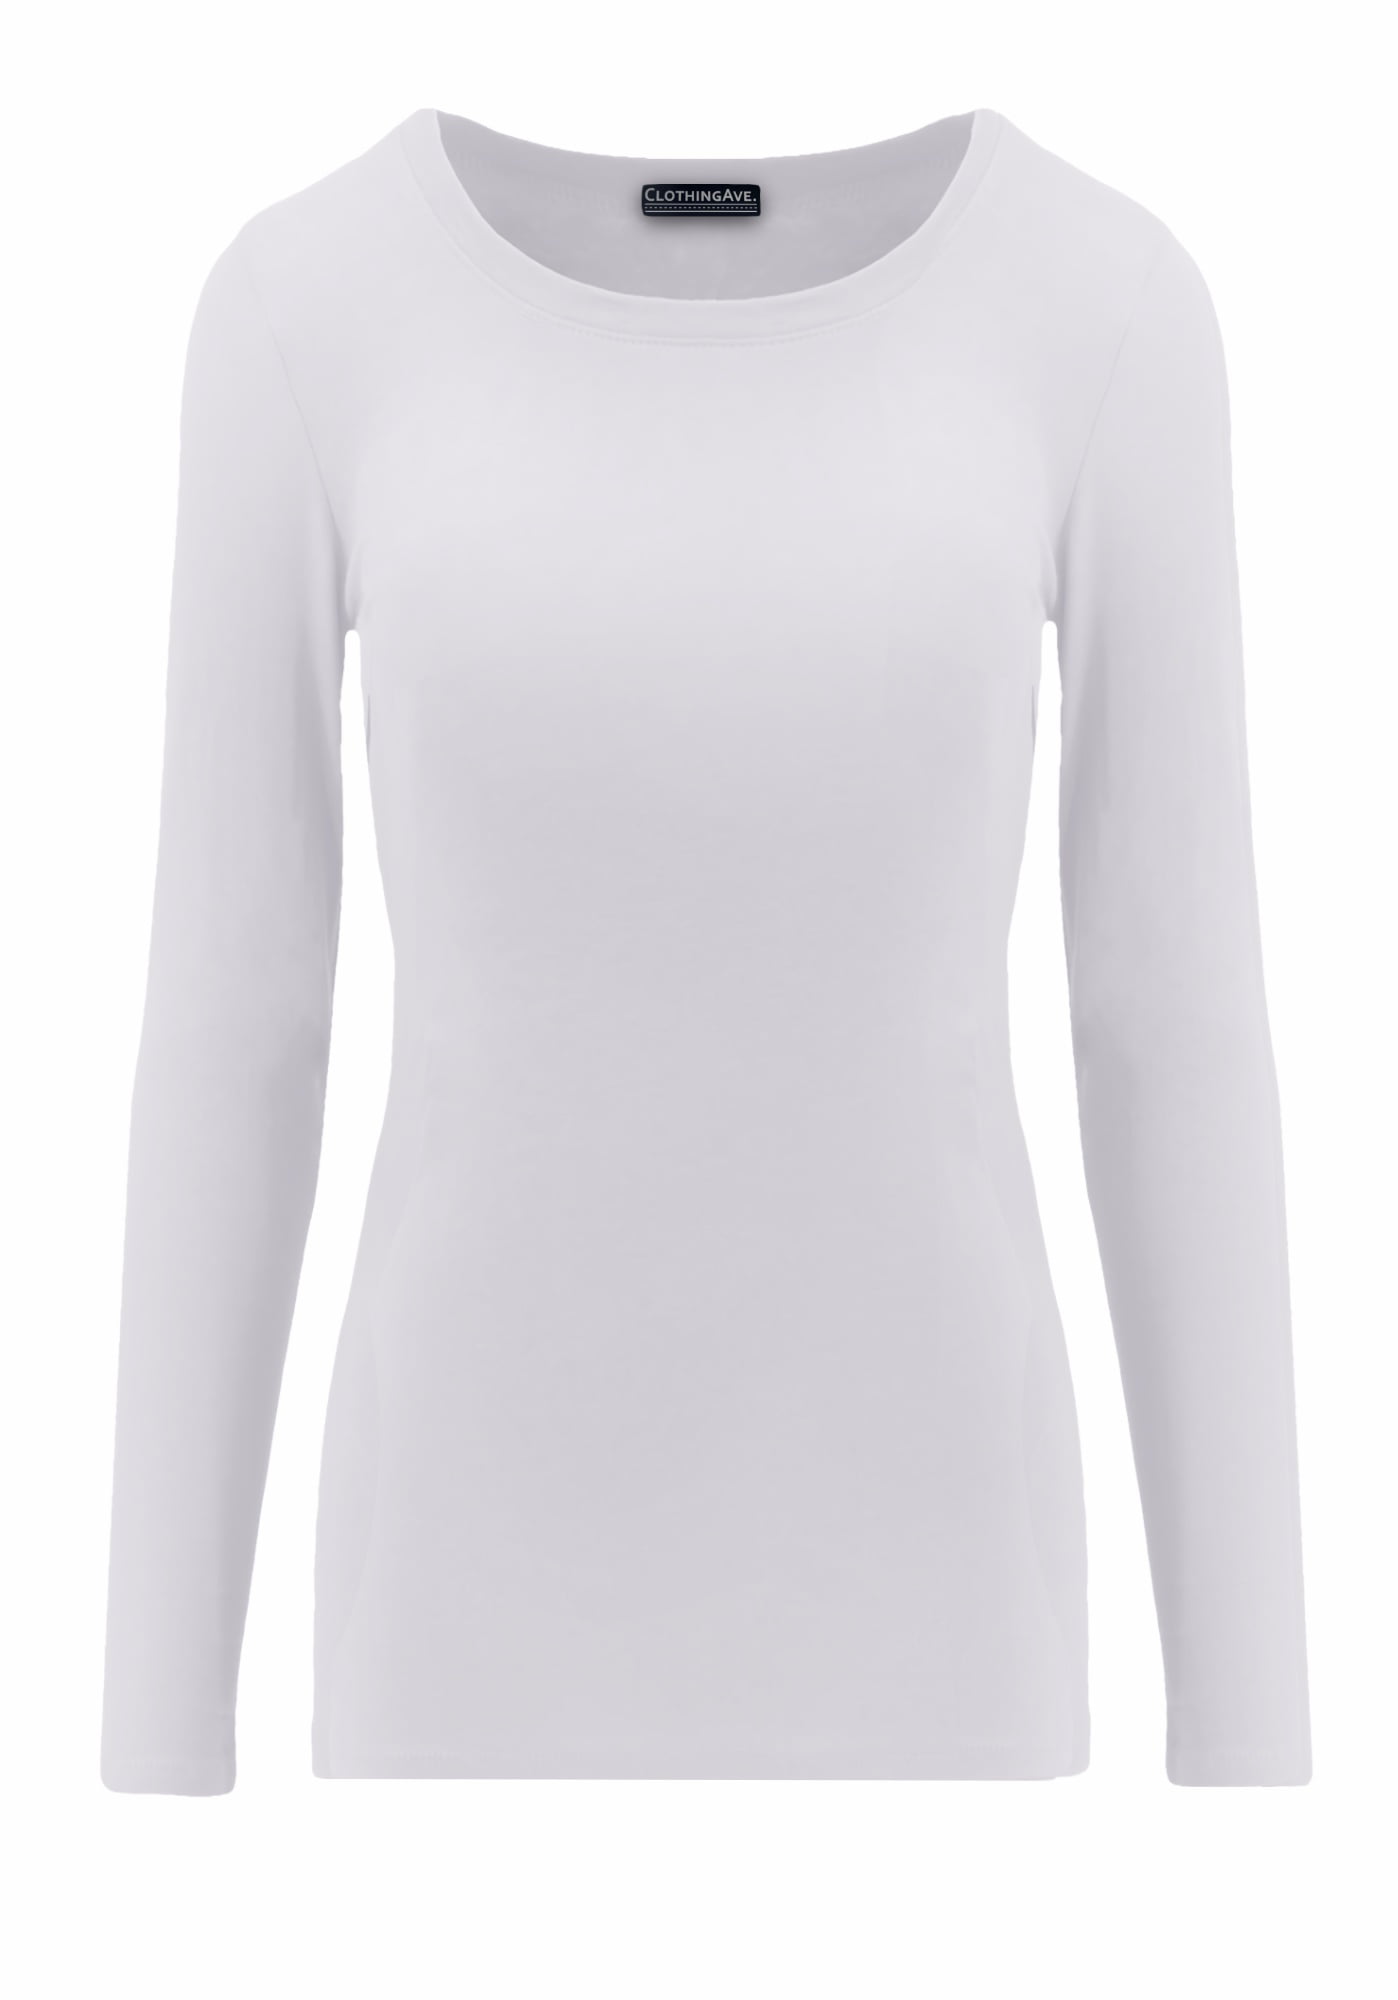 ClothingAve. - Round Neck Long Sleeve Basic Top - Walmart.com - Walmart.com